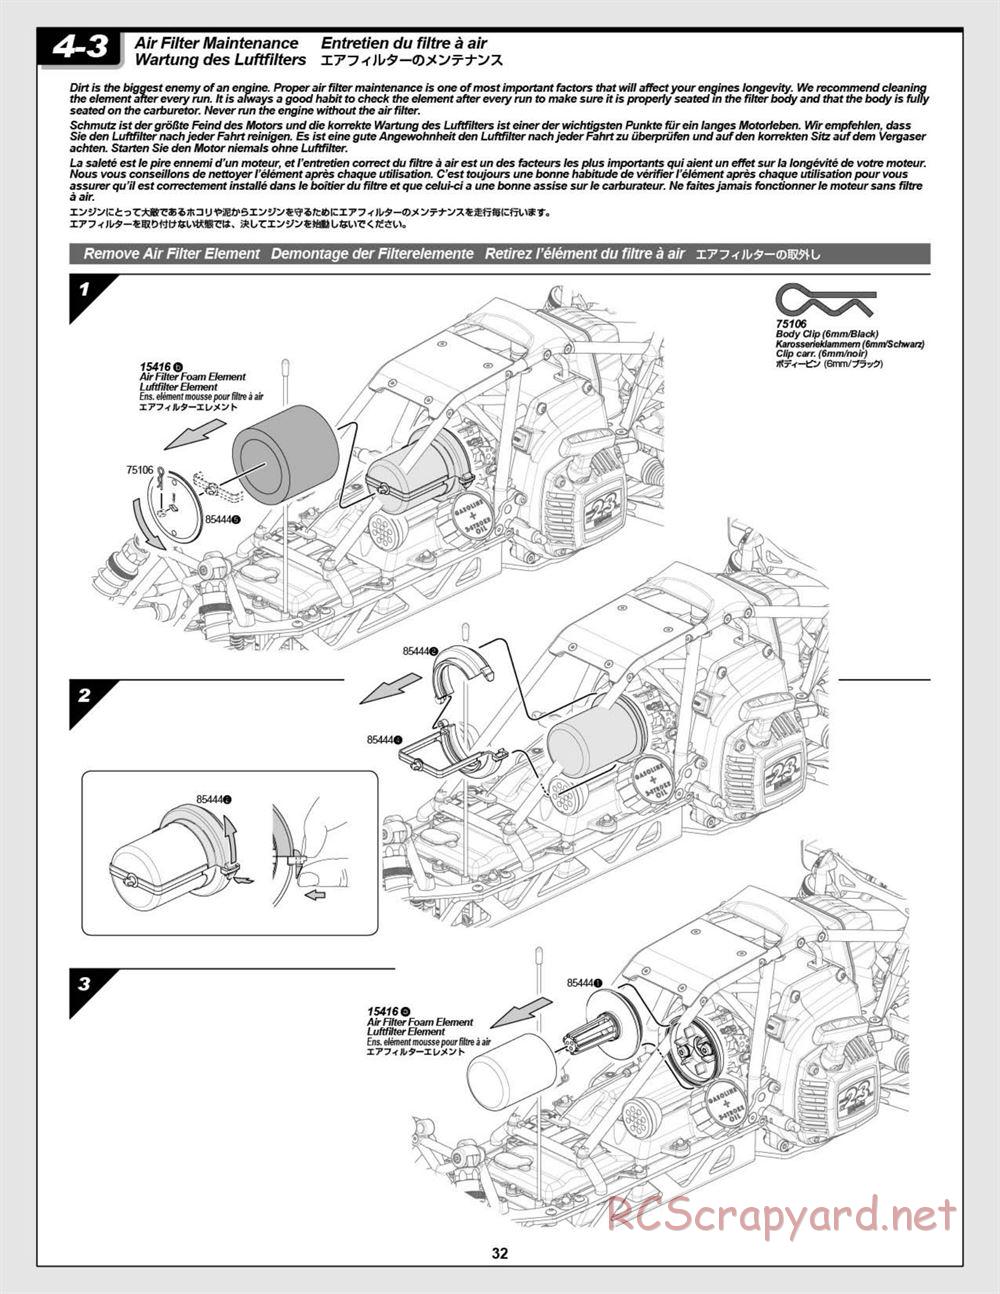 HPI - Baja 5B 2.0 RTR - Manual - Page 32